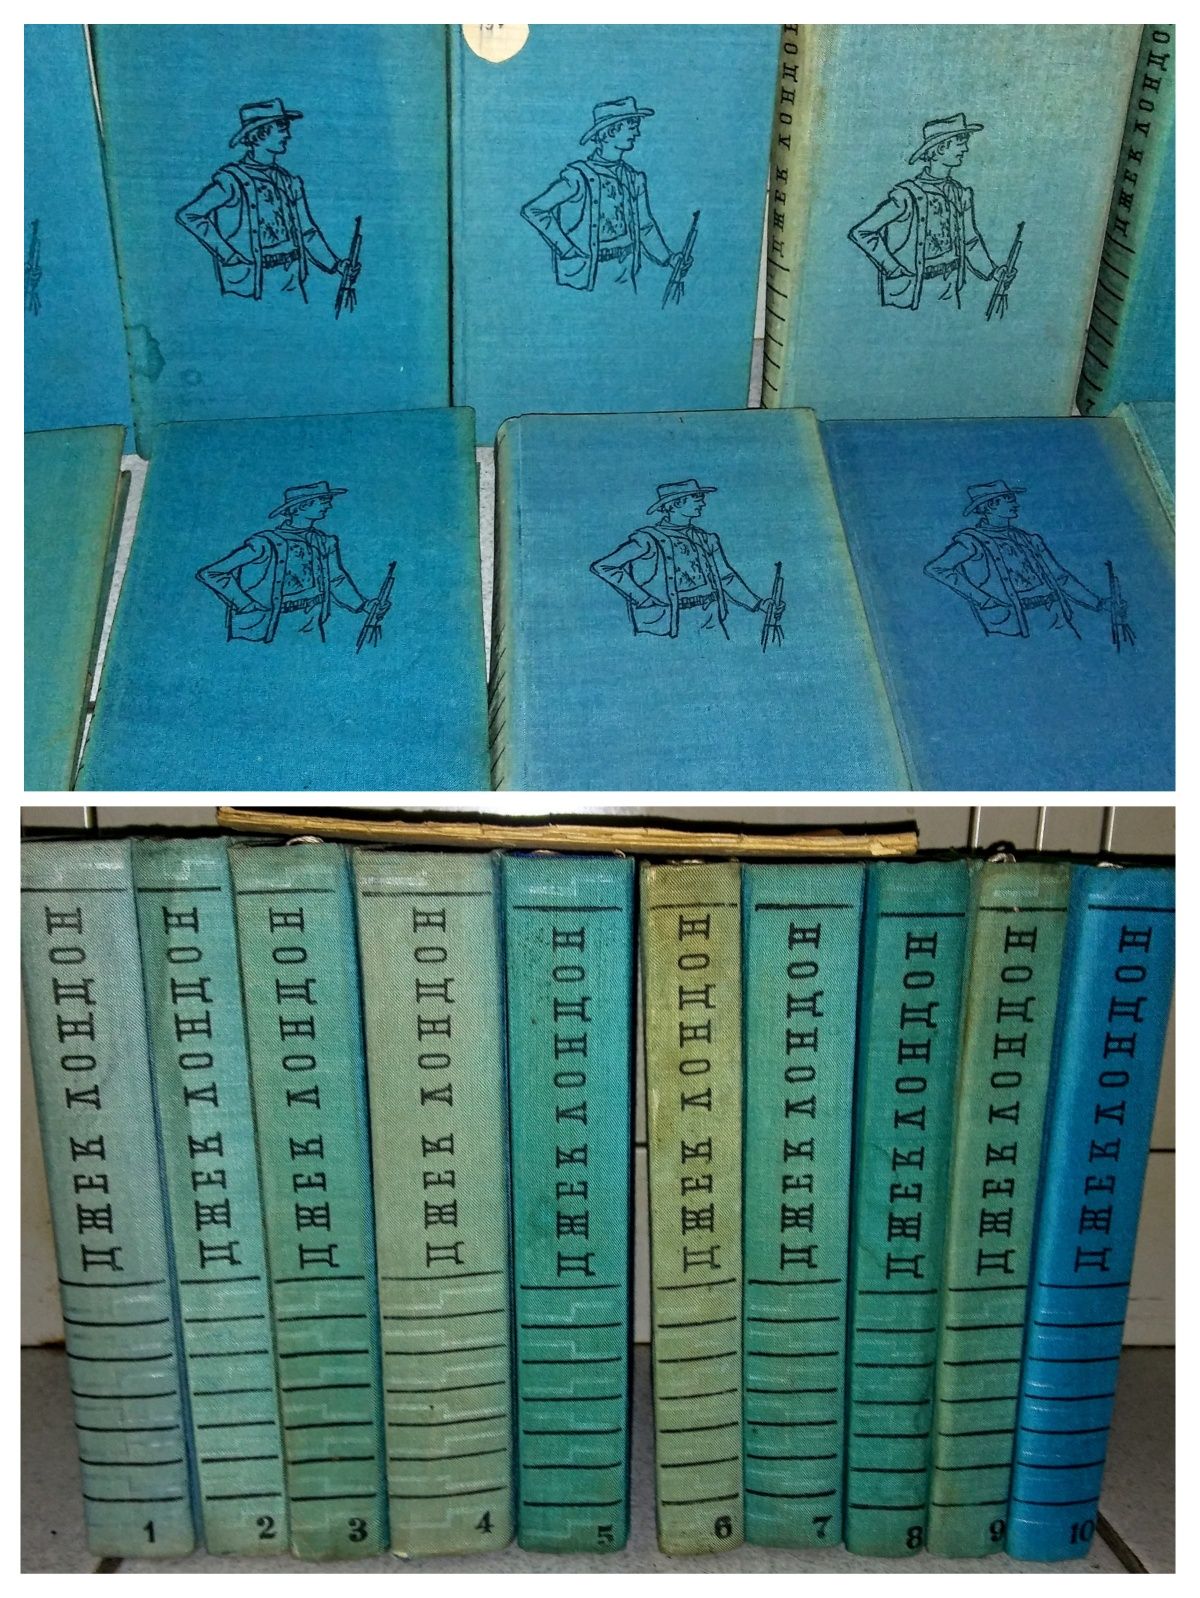 Джек Лондон. Избрани произведения в 10 тома. 1961-1963 плюс бонус.